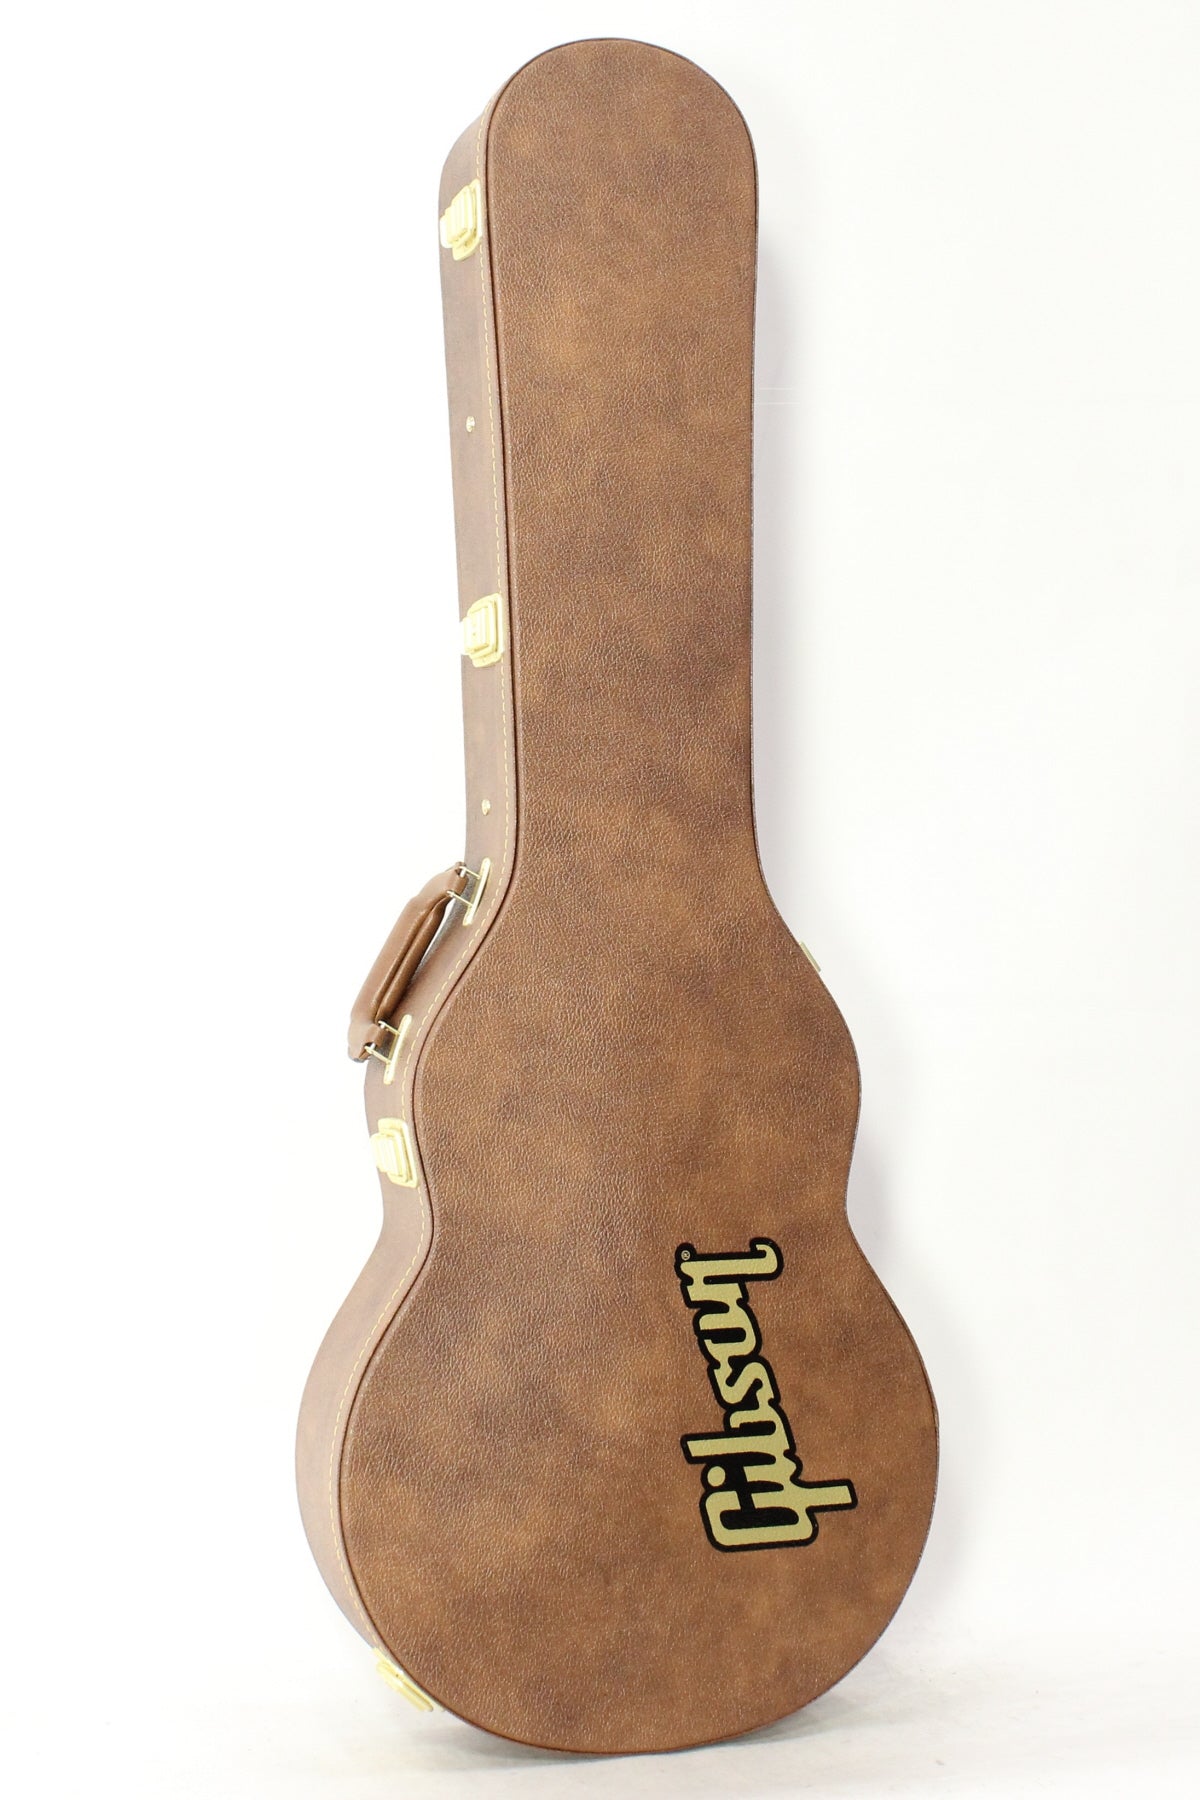 [SN 229230191] USED Gibson USA / Les Paul Standard 50s Heritage Cherry Sunburst [03]